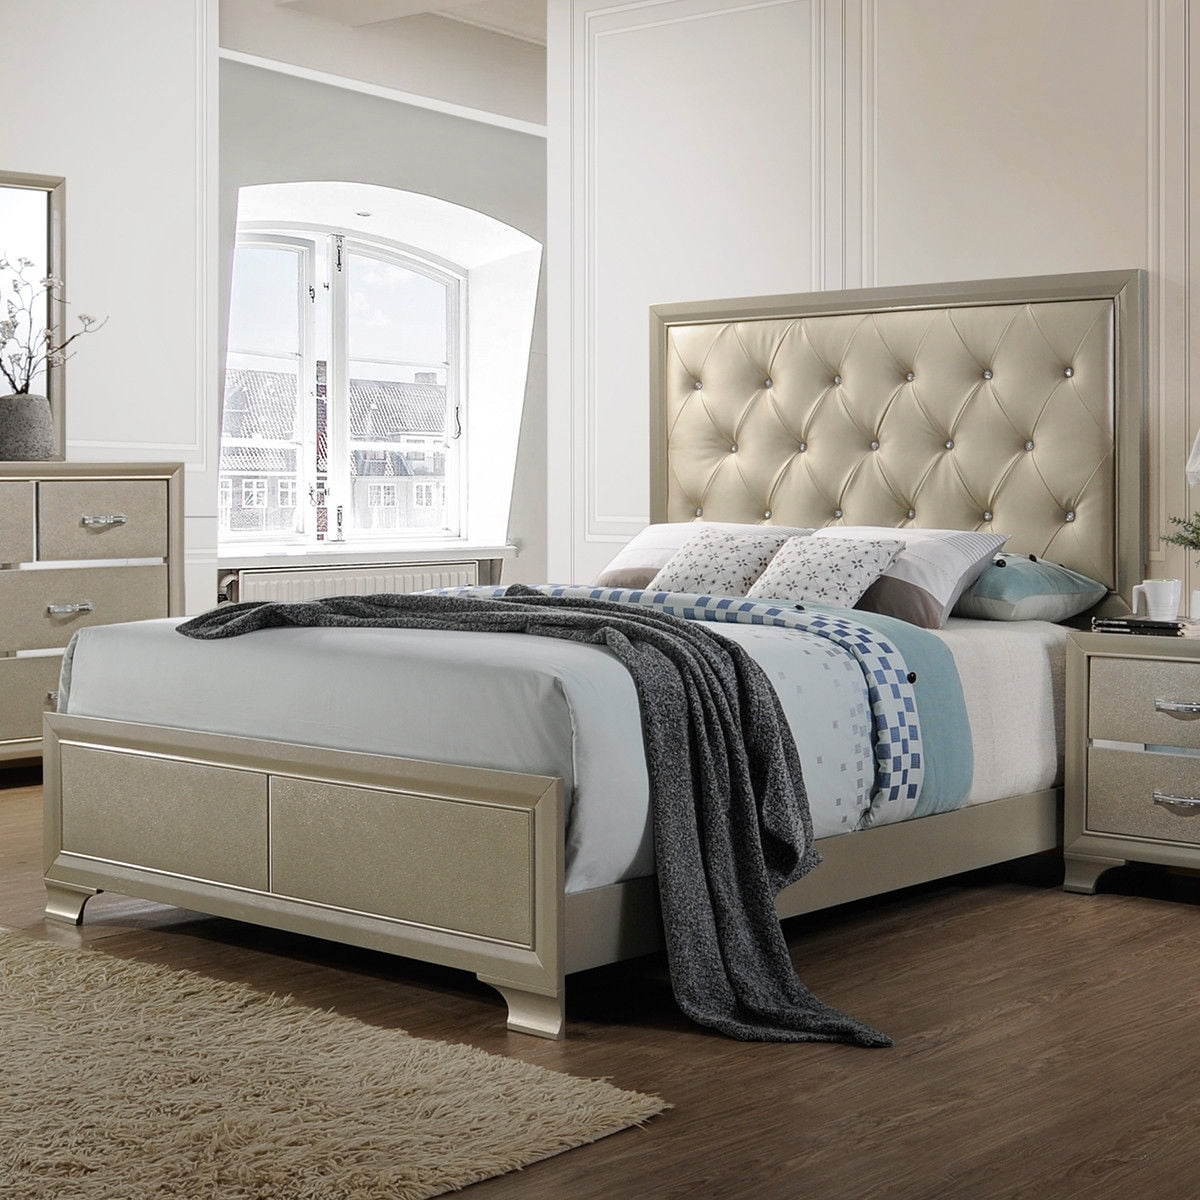 King Size Bed Frame Platform Tall Headboard Wood Slats Home Furniture